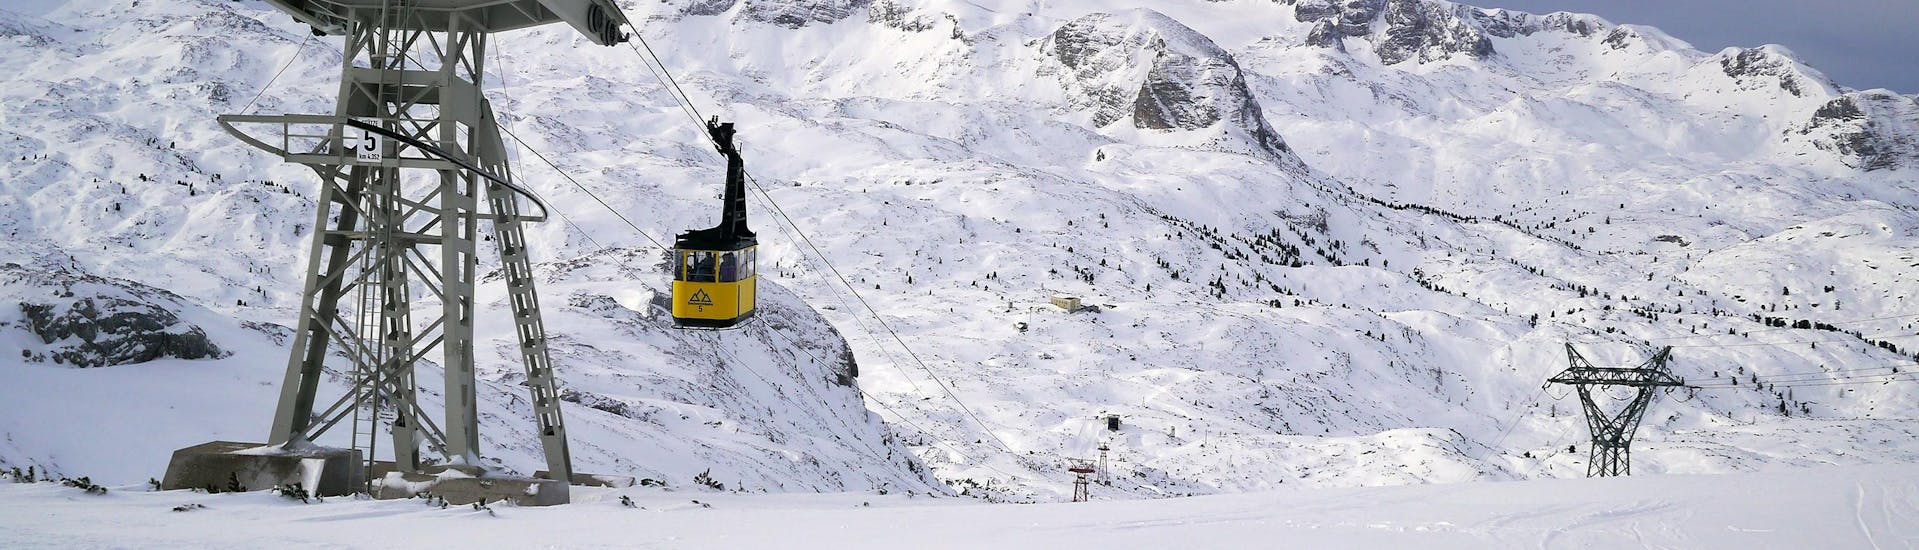 View of the gondola in the snowy Dachstein Krippenstein ski area, where local ski schools offer their ski courses.